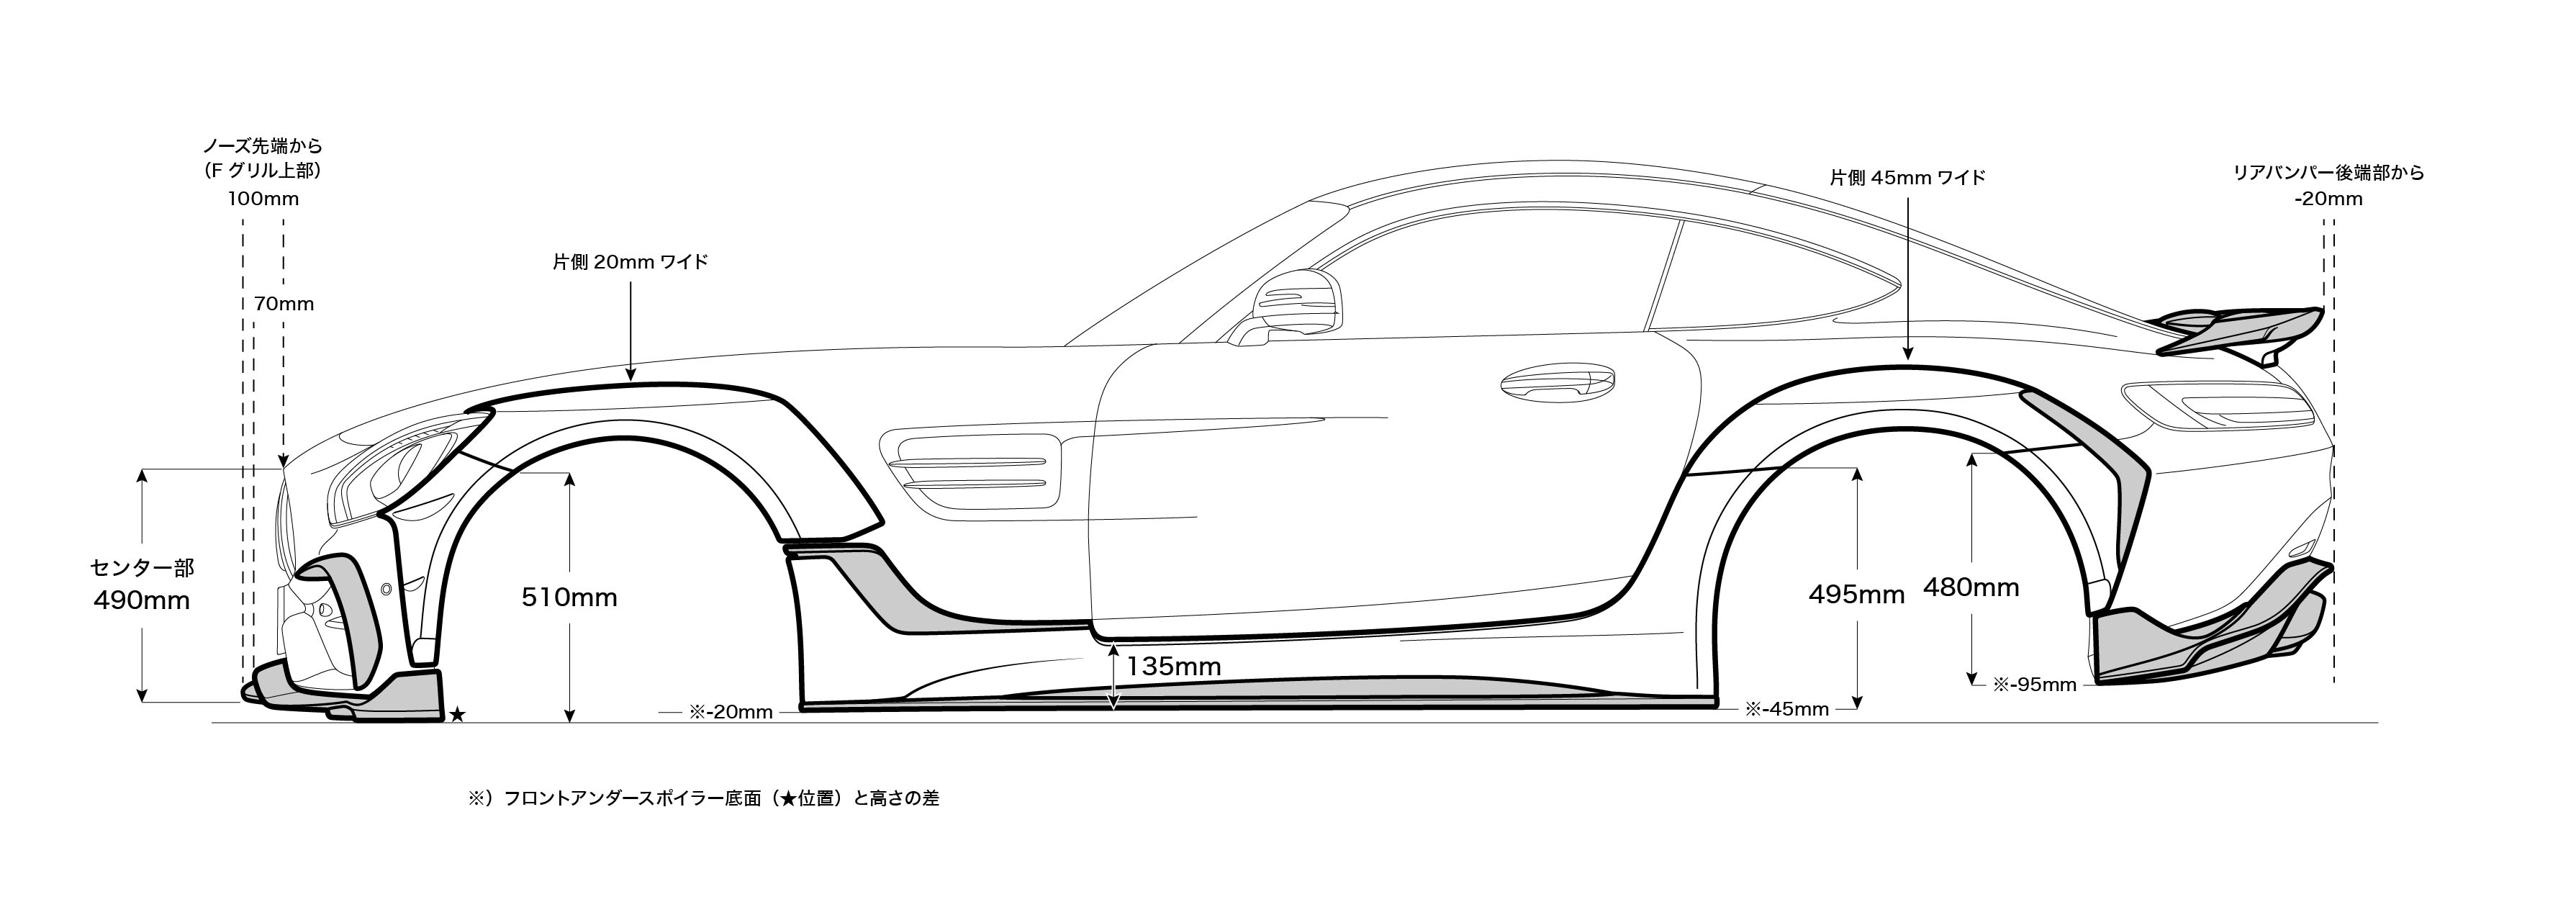 DESIGN WORKS Mercedes-AMG GT エアロサイズ